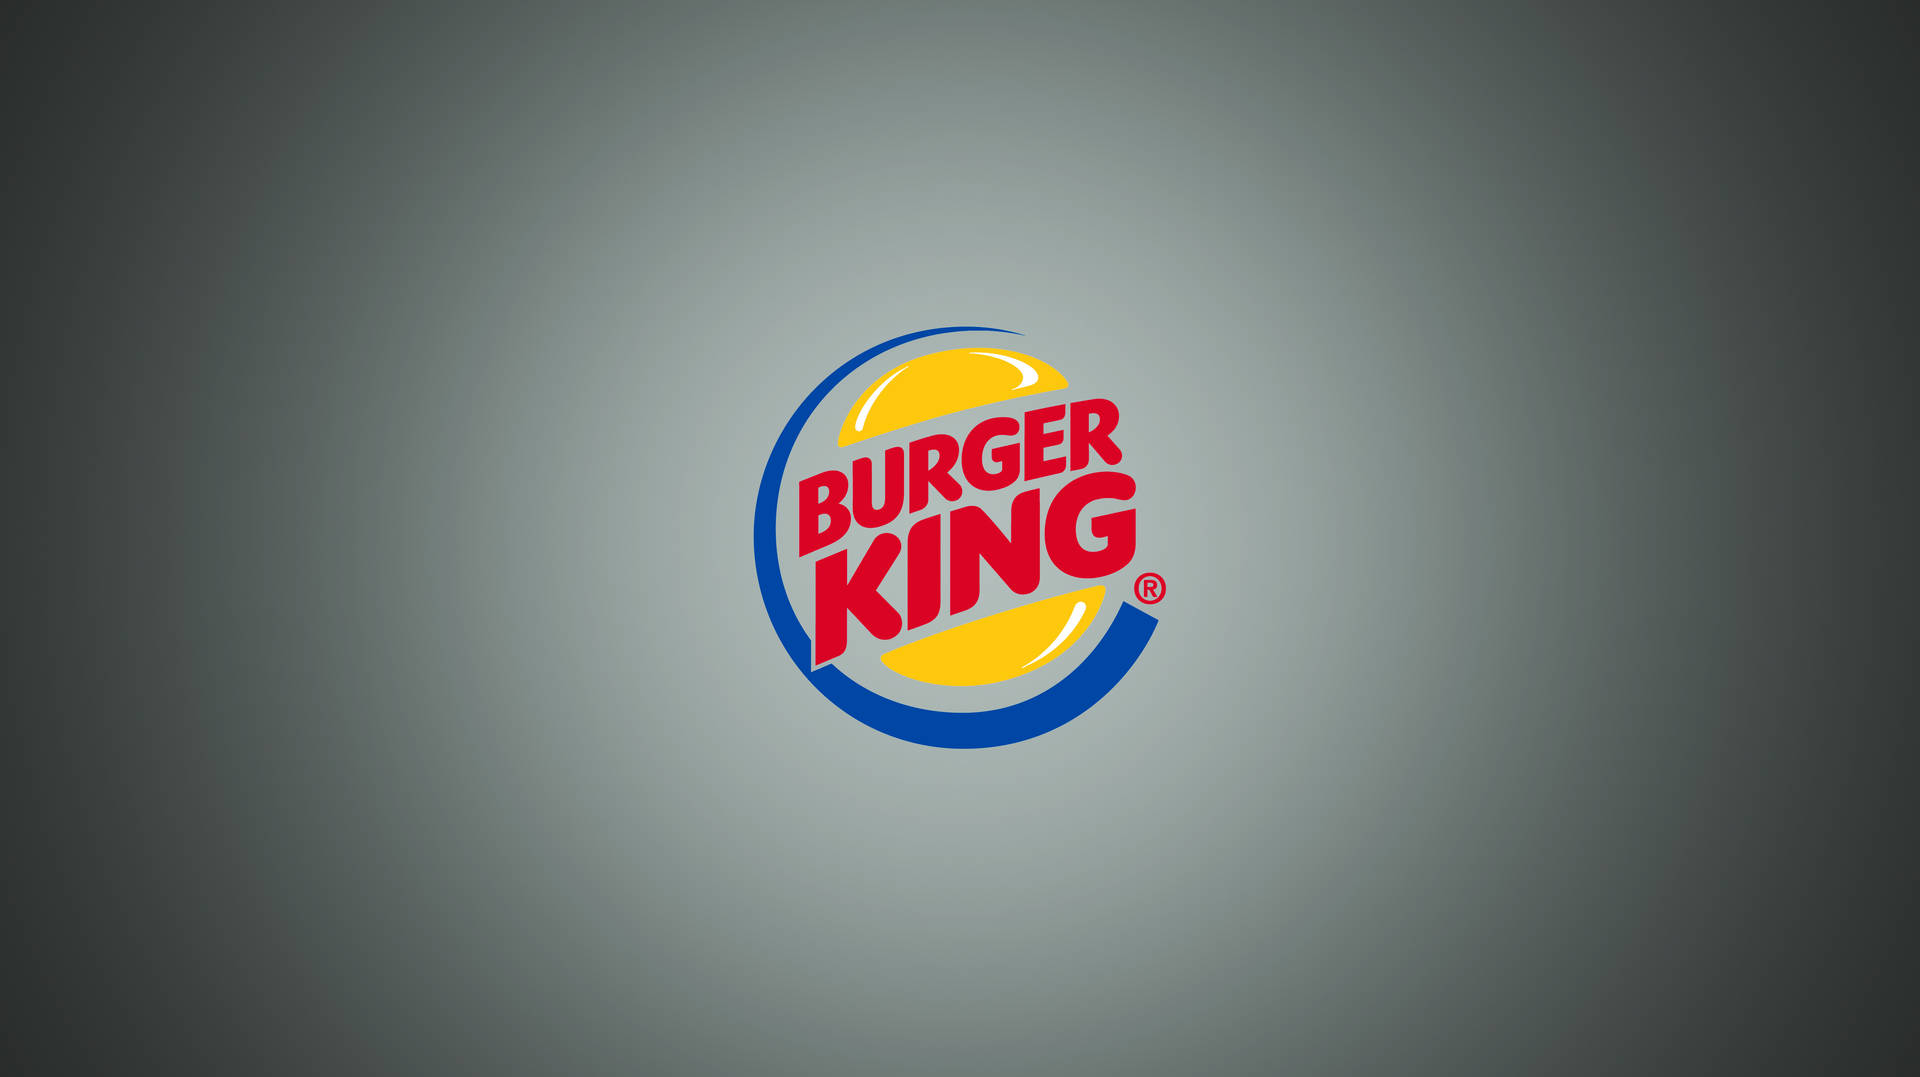 Top 999+ Burger King Wallpaper Full HD, 4K✅Free to Use